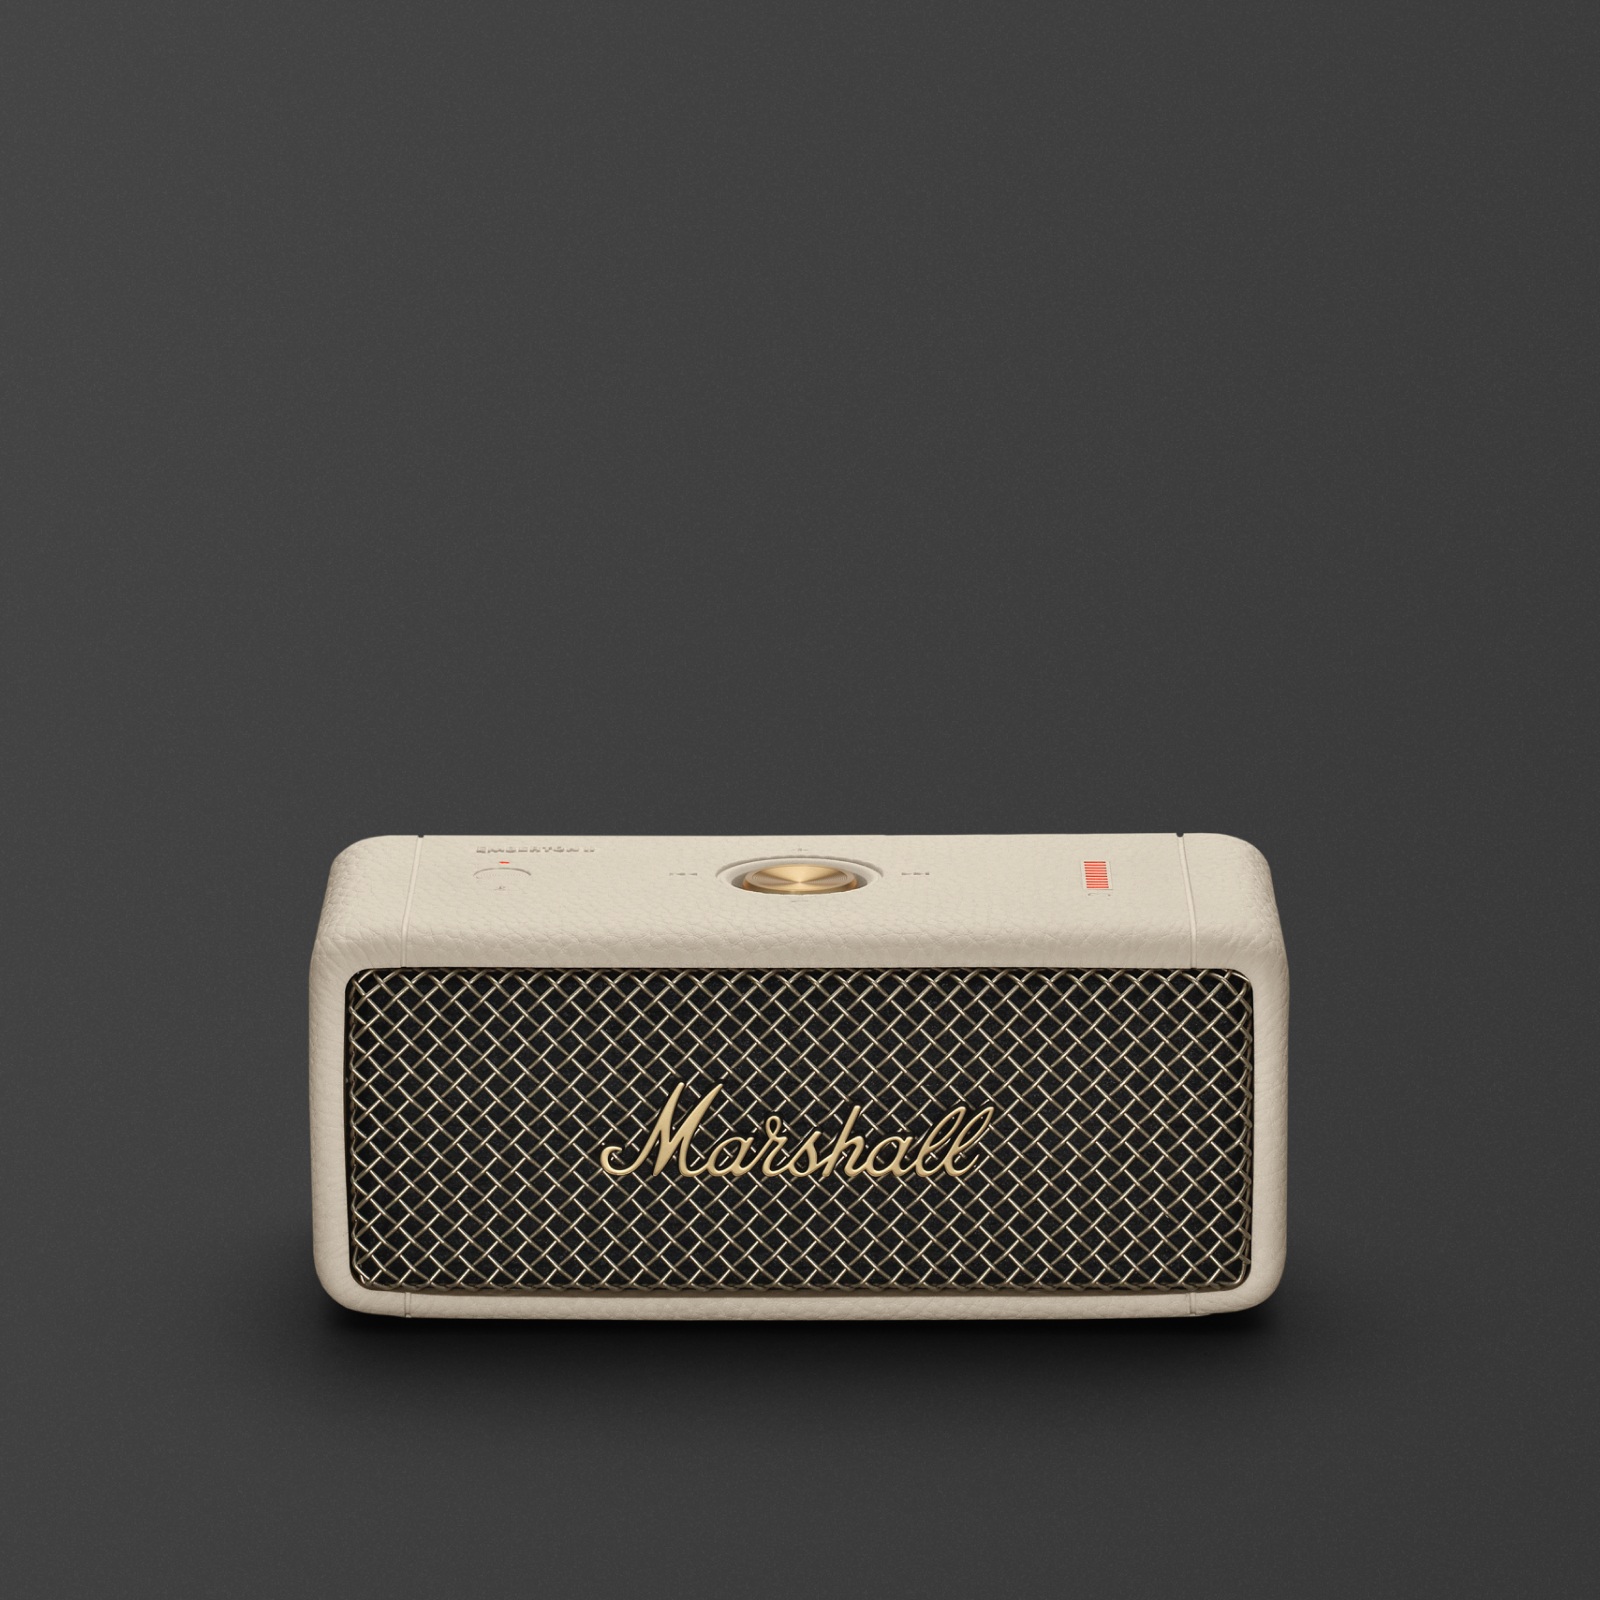 Marshall Emberton II Cream Speaker front facing